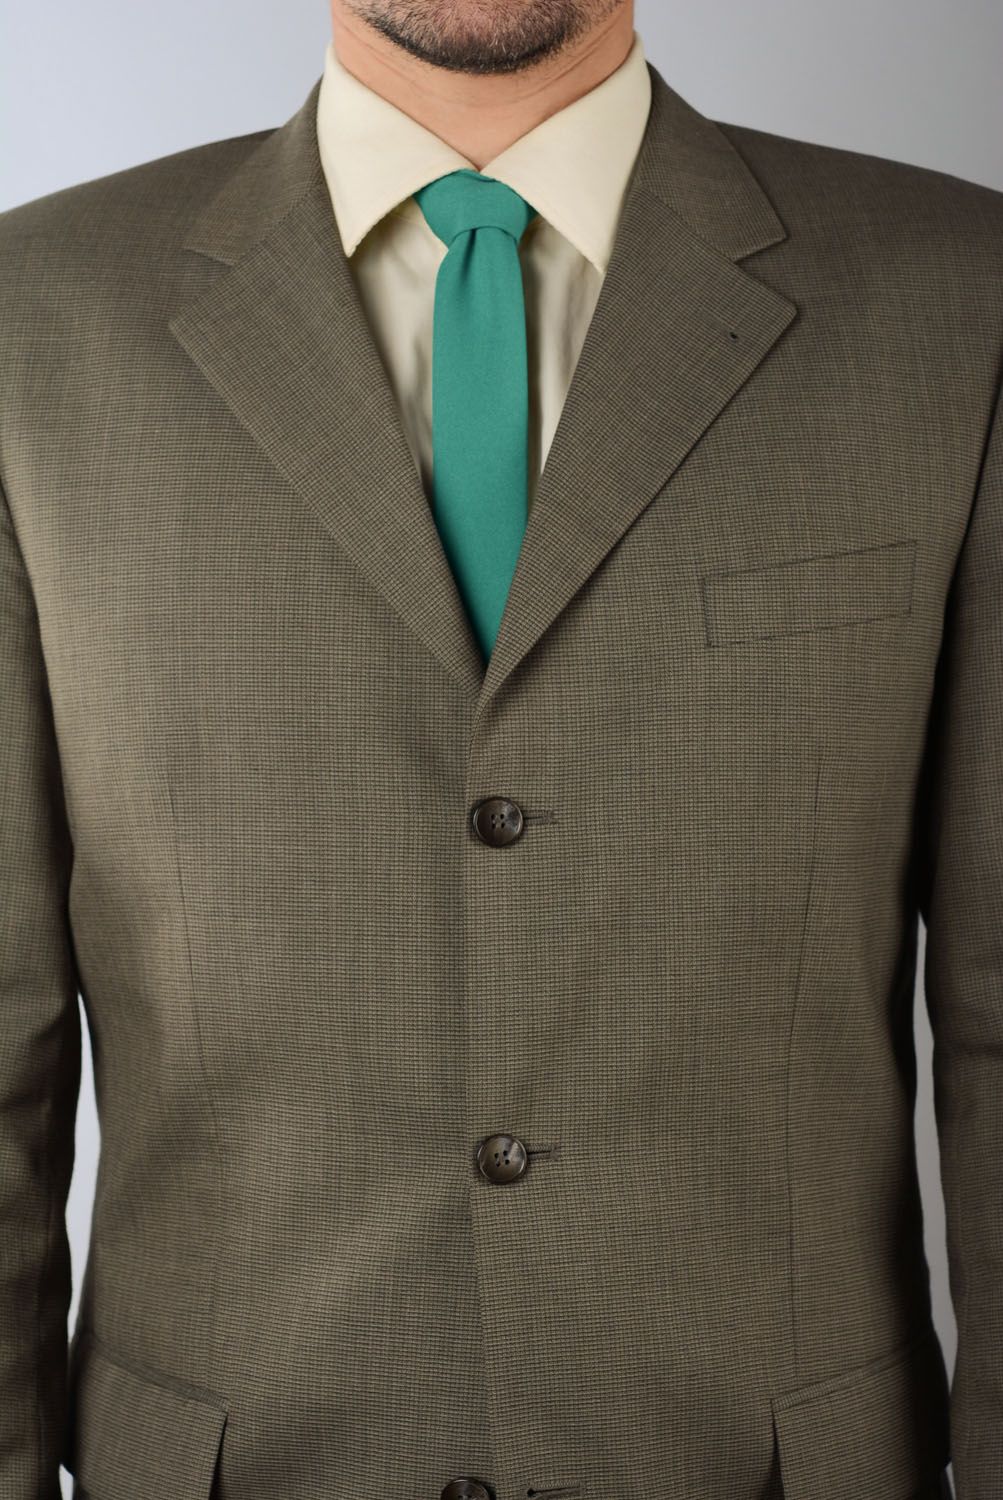 Cravate turquoise en gabardine faite main photo 4